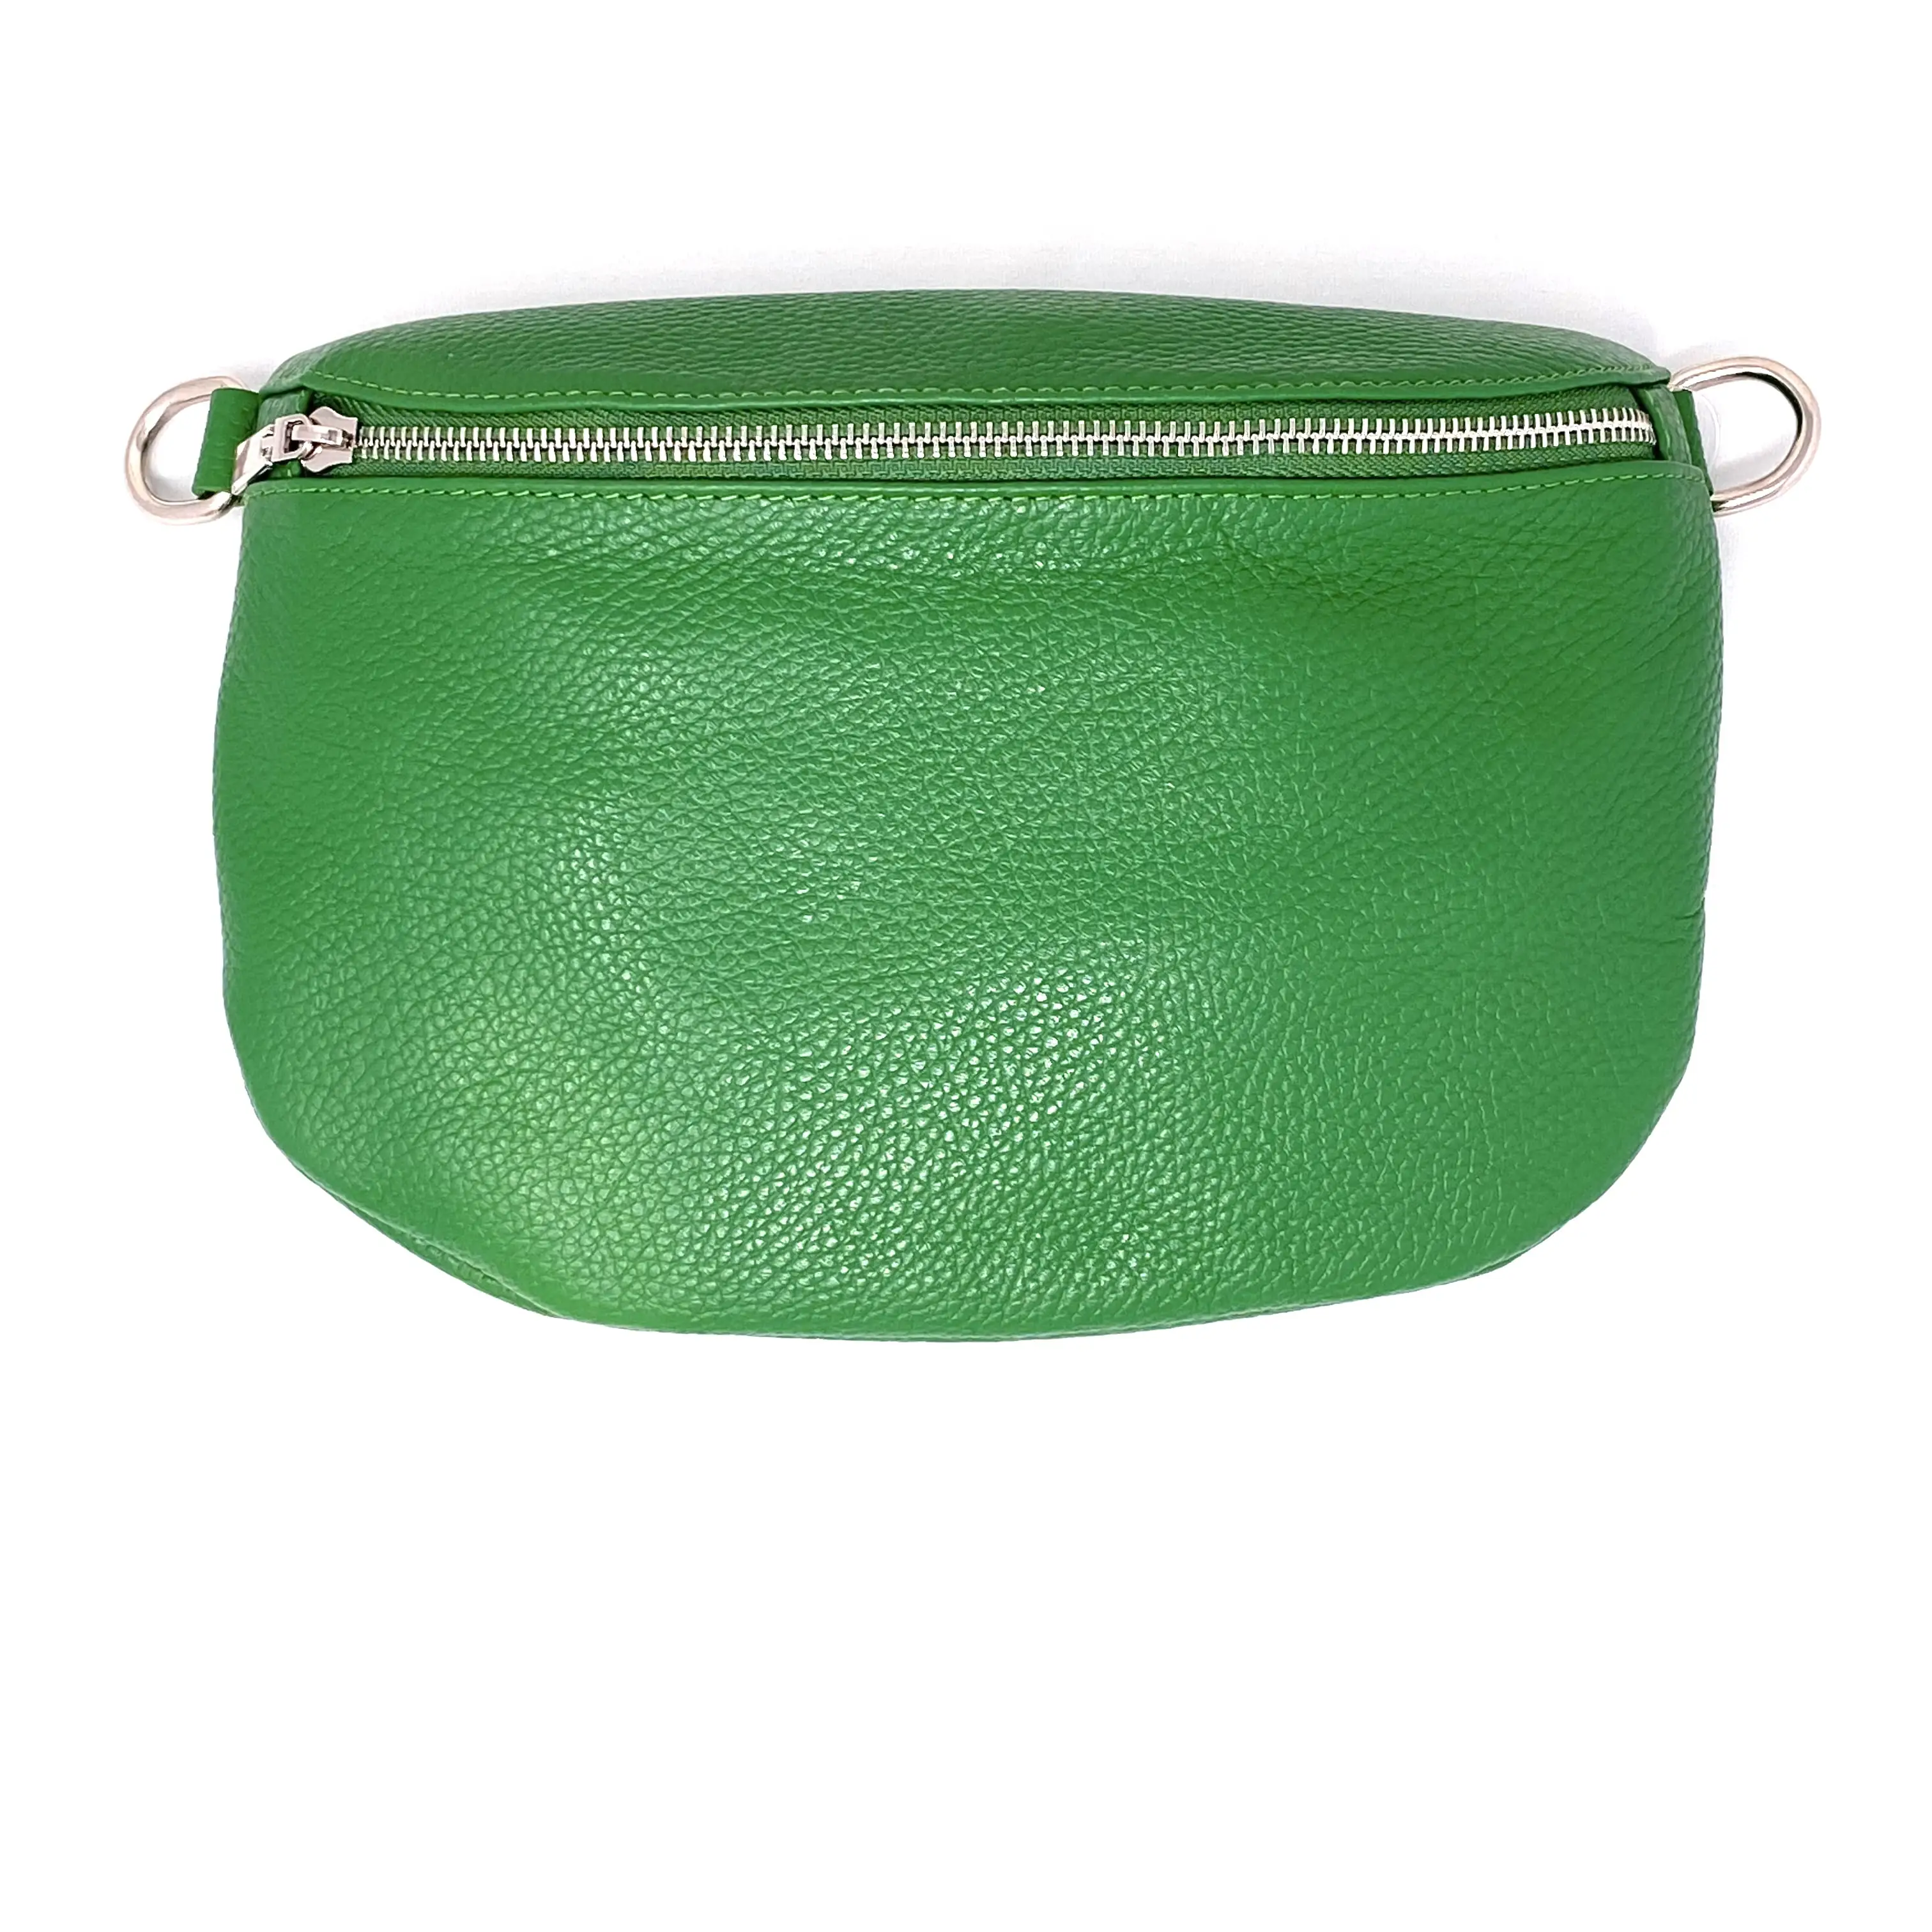 Body Bag in Leder grün